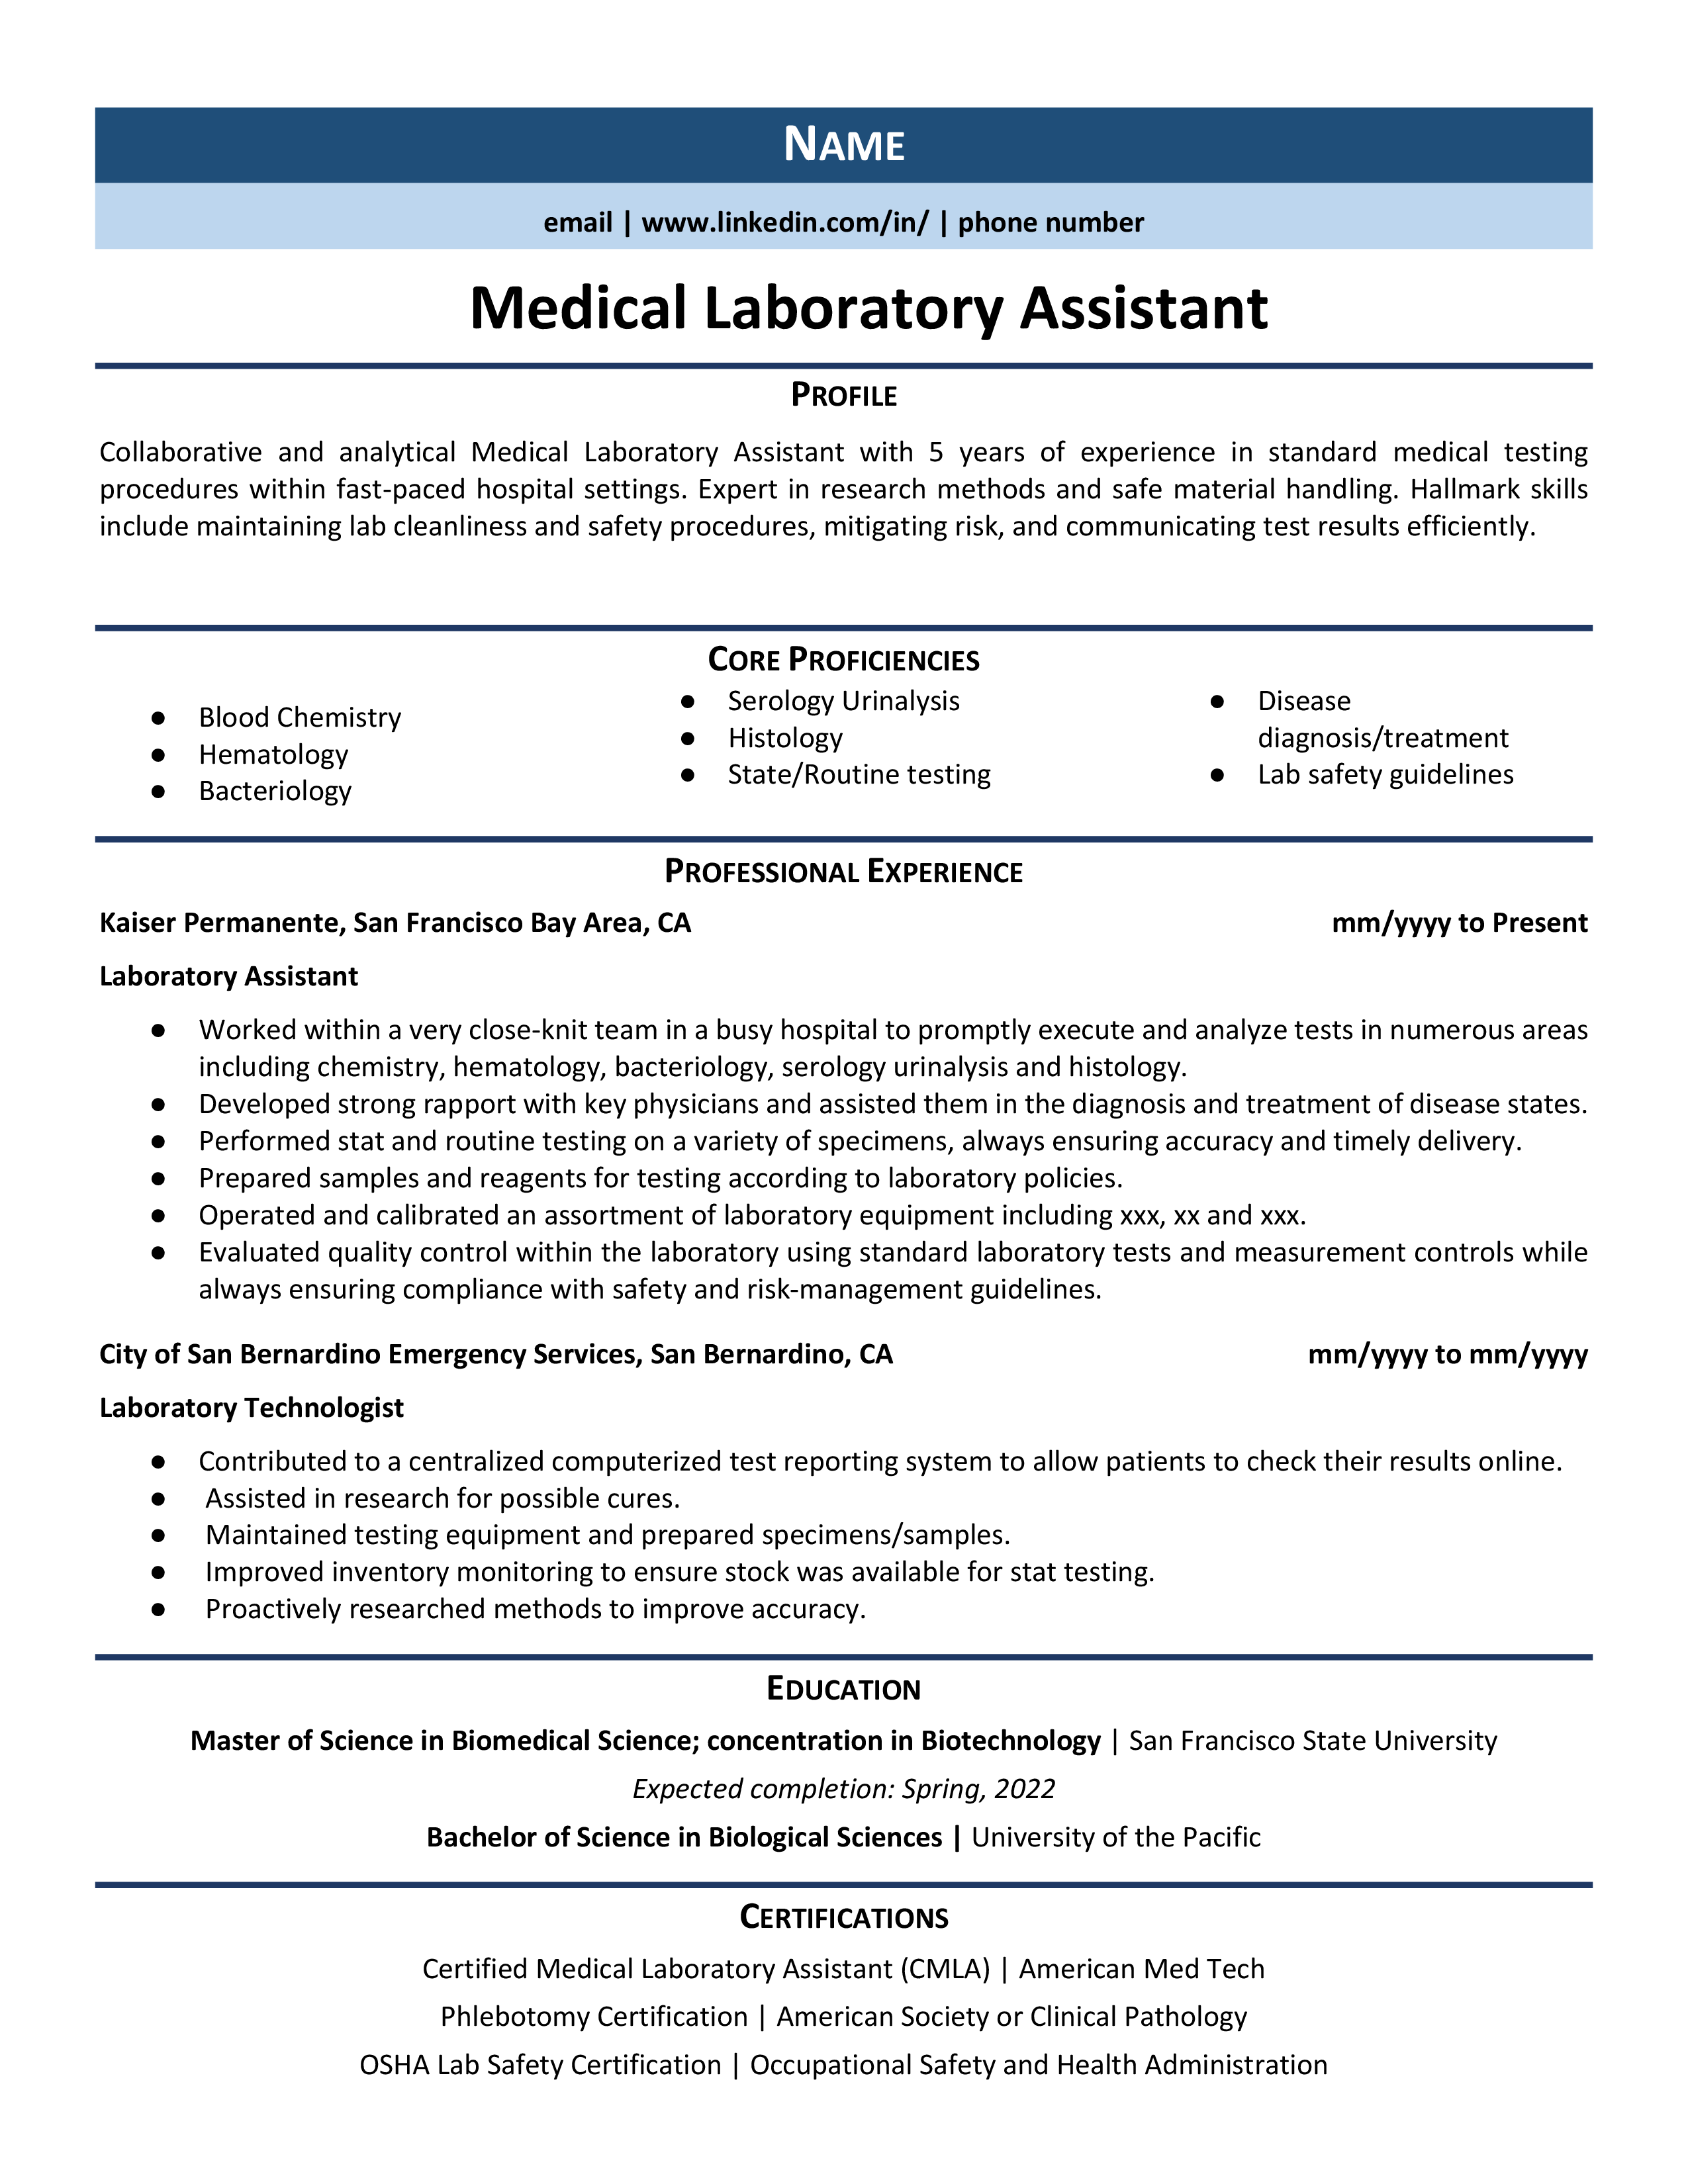 nurse medical edition resume template free